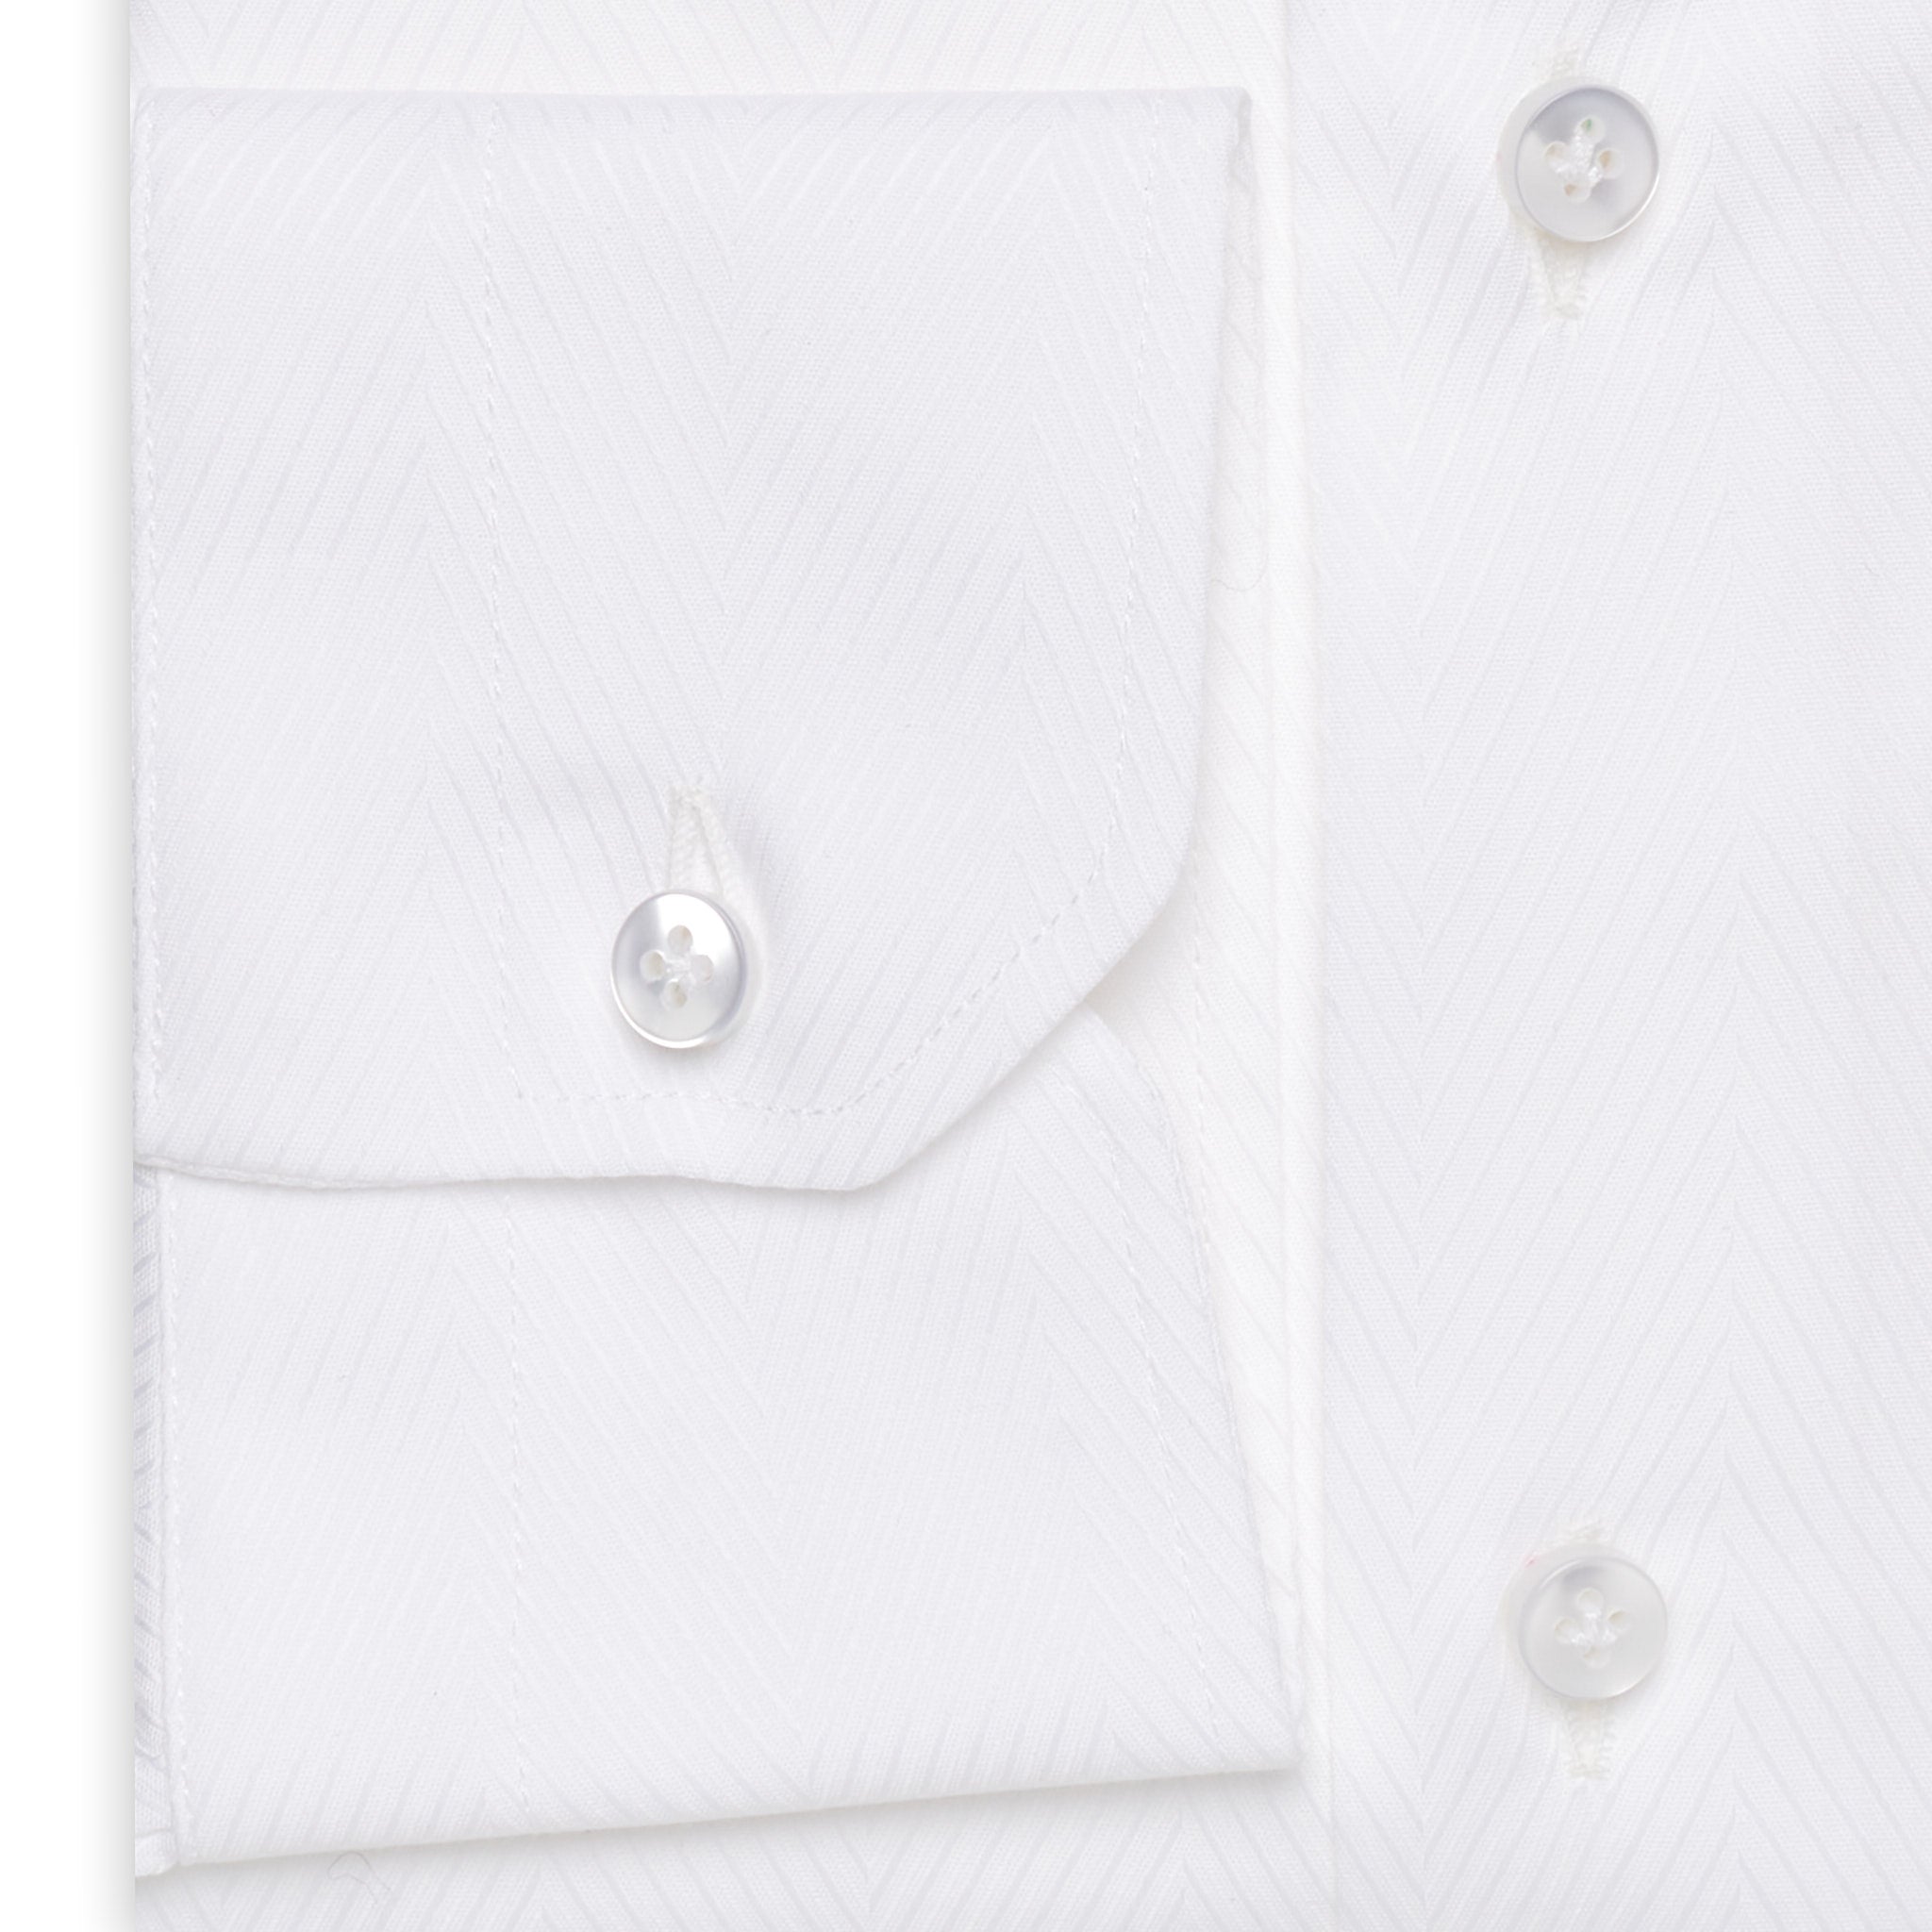 SARTORIO by KITON White Jacquard Herringbone Cotton Dress Shirt NEW Slim Fit